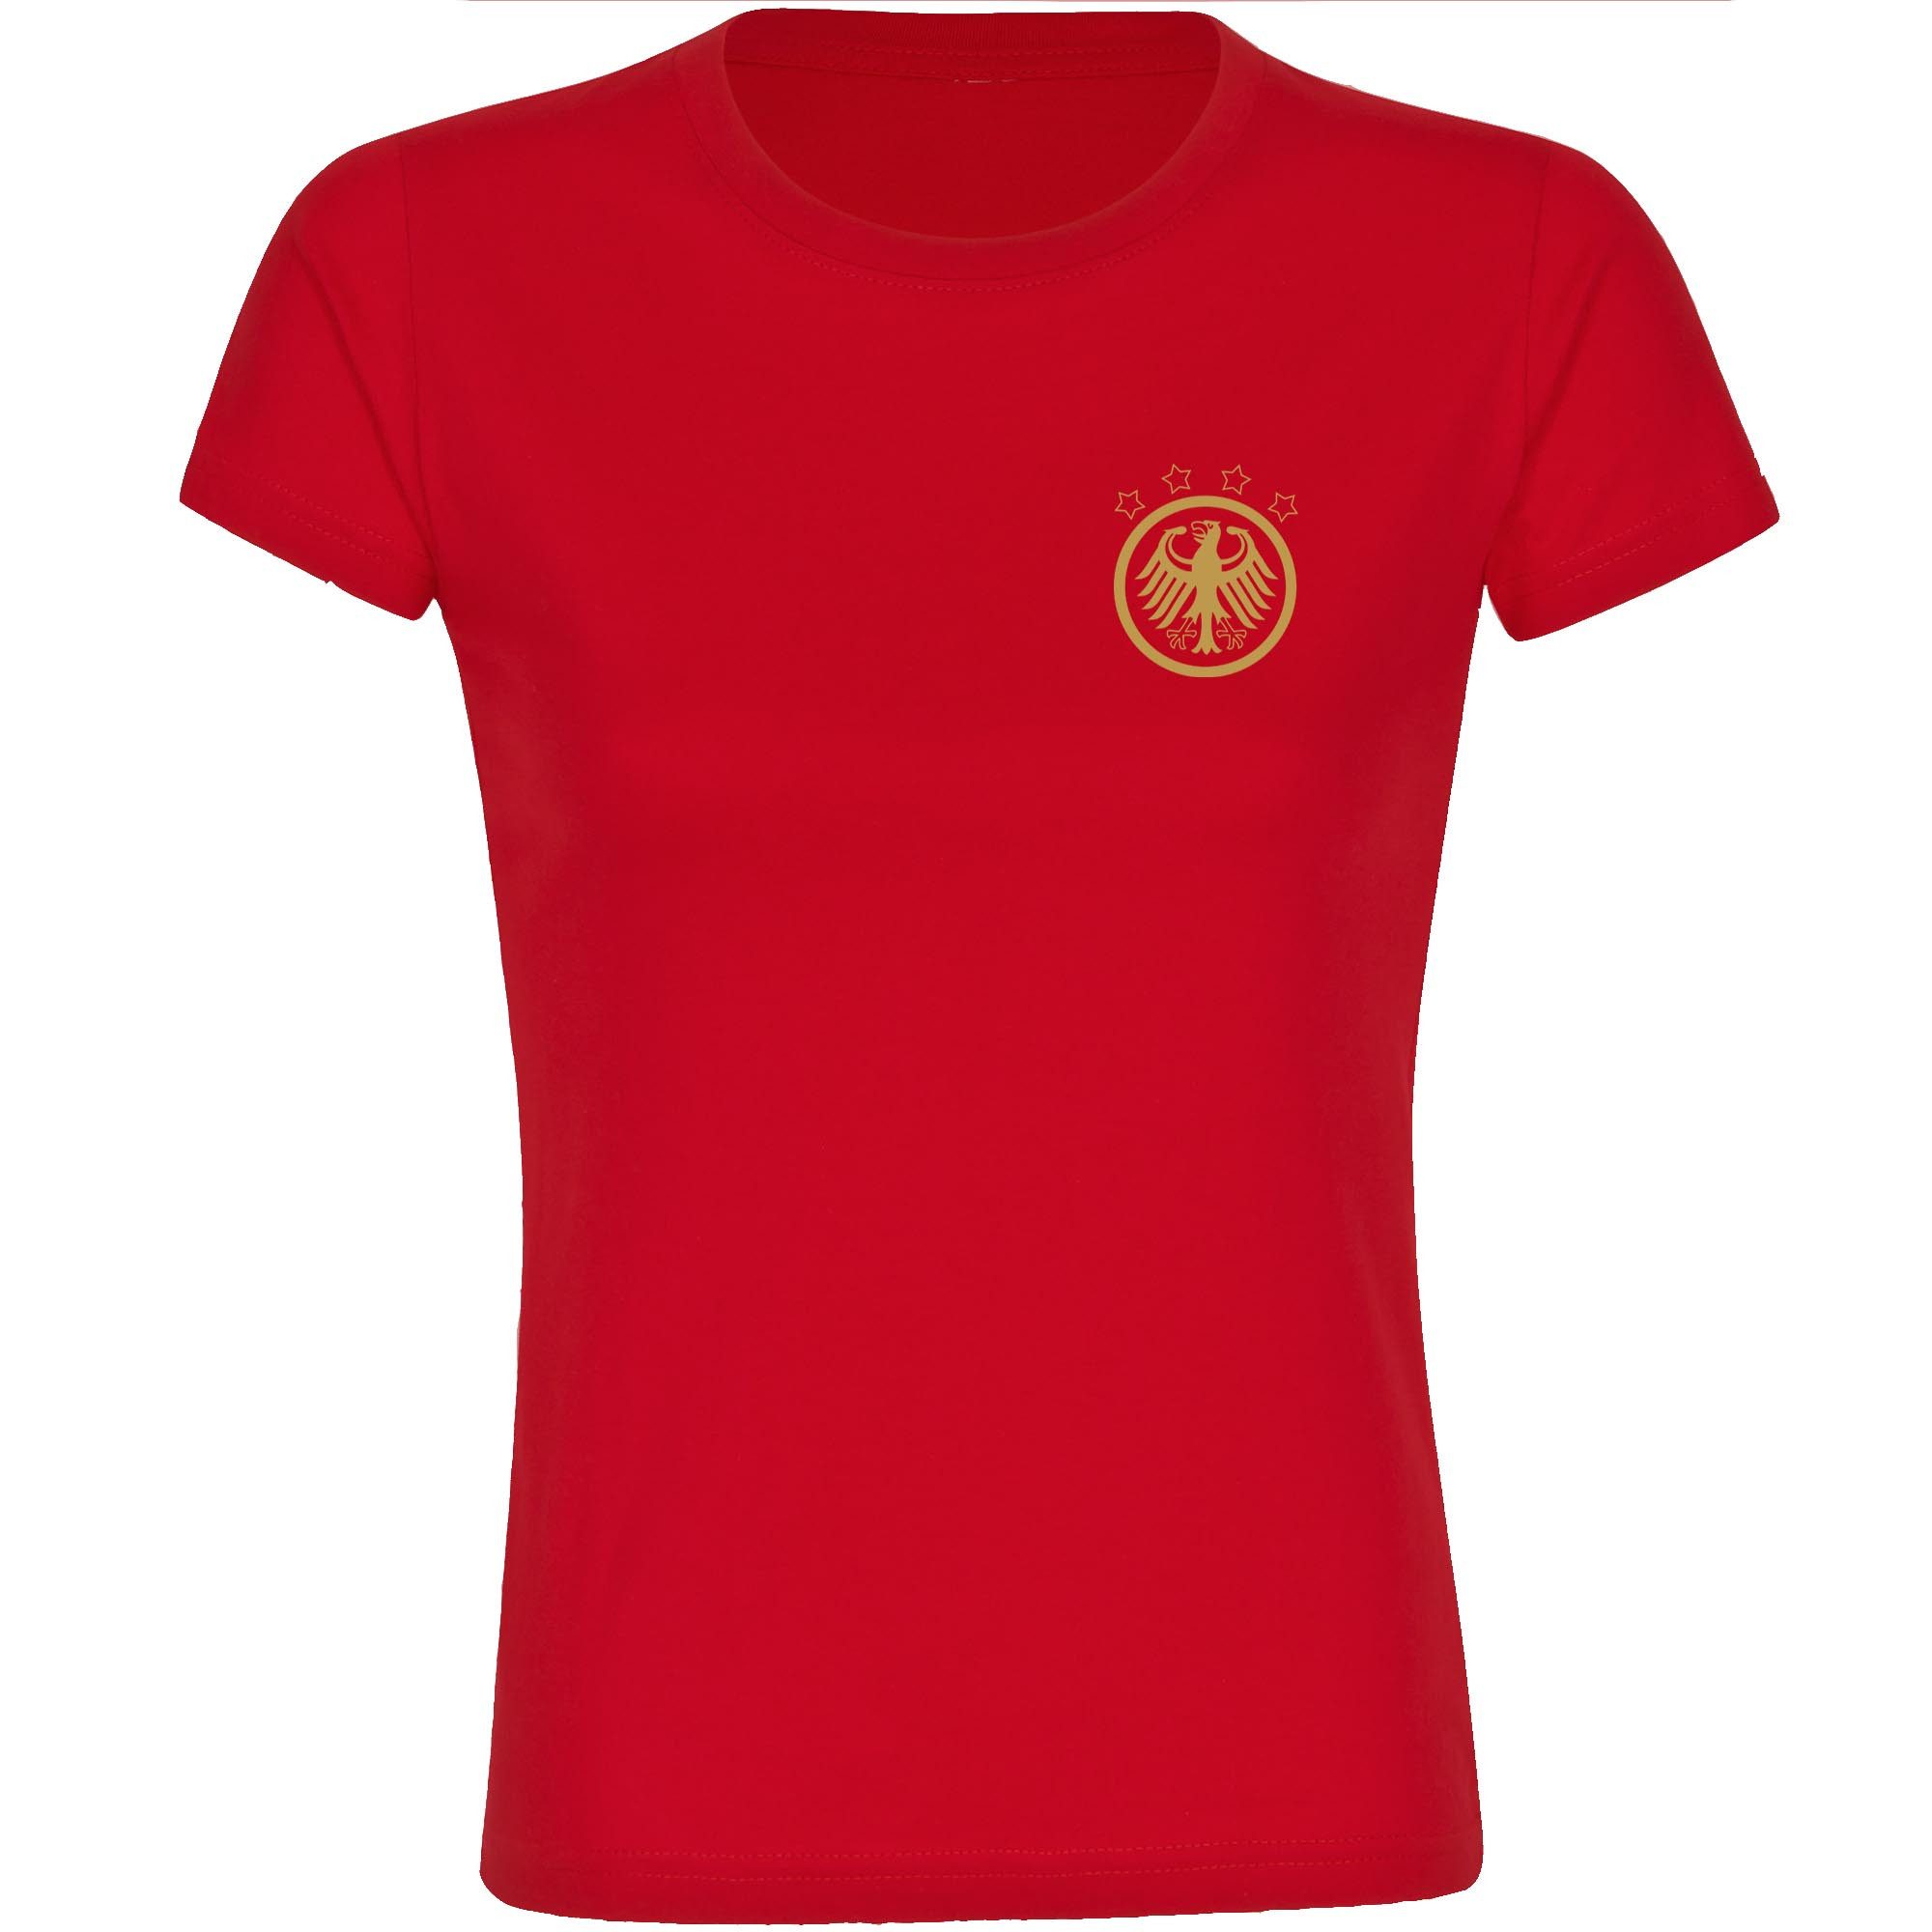 multifanshop T-Shirt Damen Germany - Adler Retro Gold - Frauen